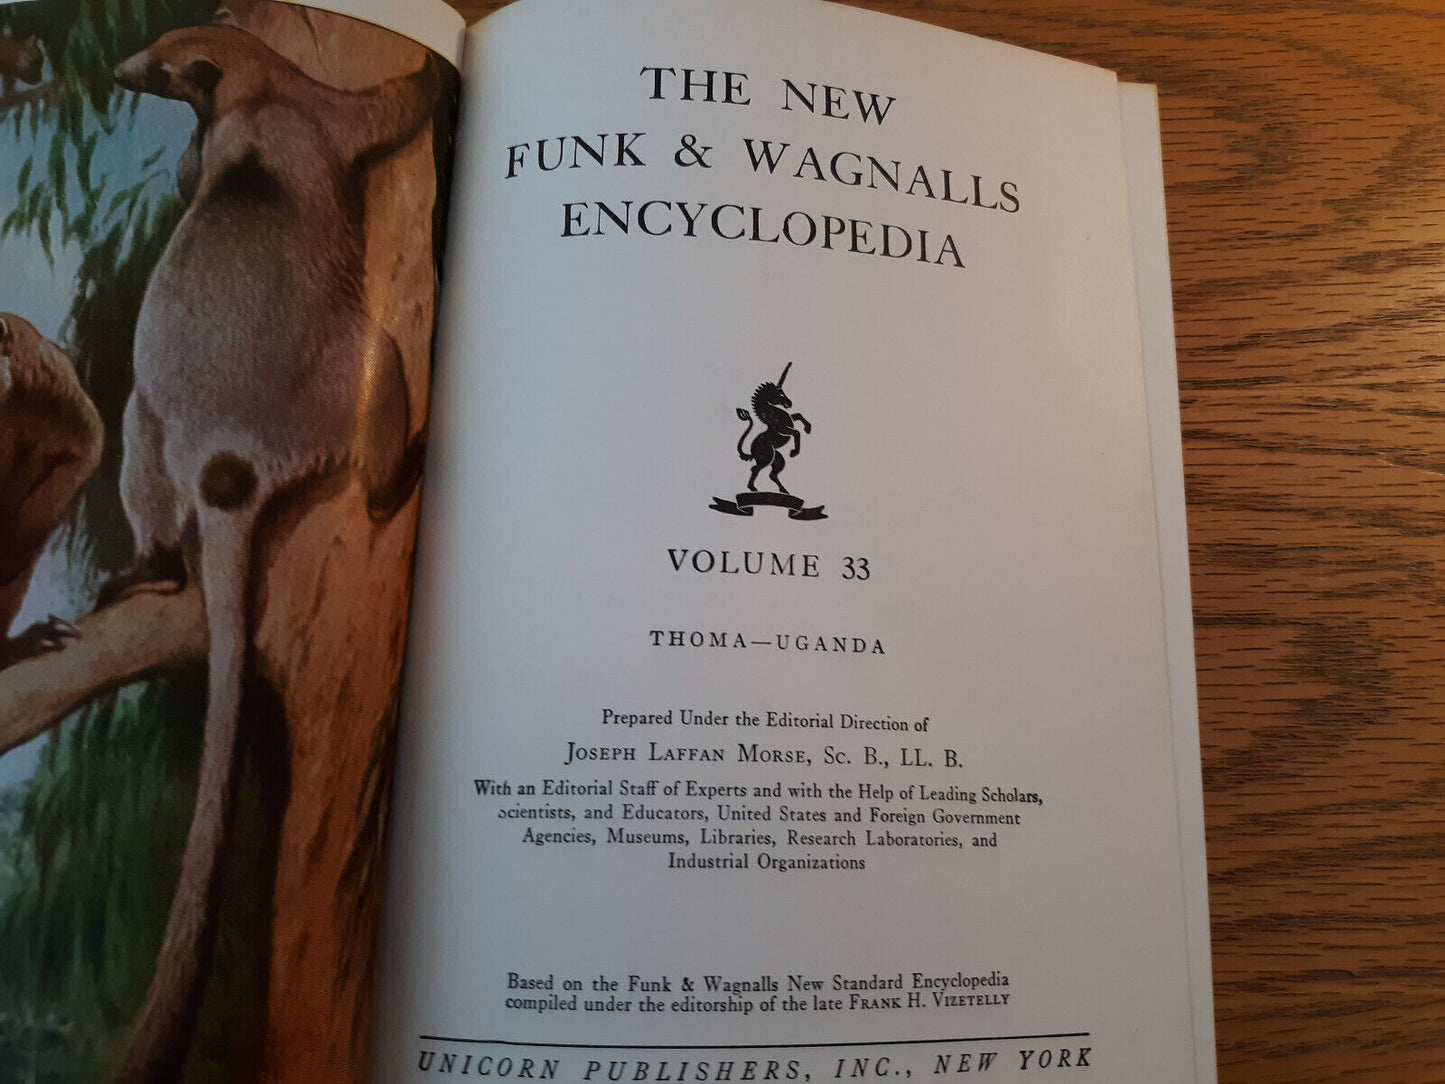 The New Funk & Wagnalls Encyclopedia 1954 Unicorn Pub Hardcover Volume 33